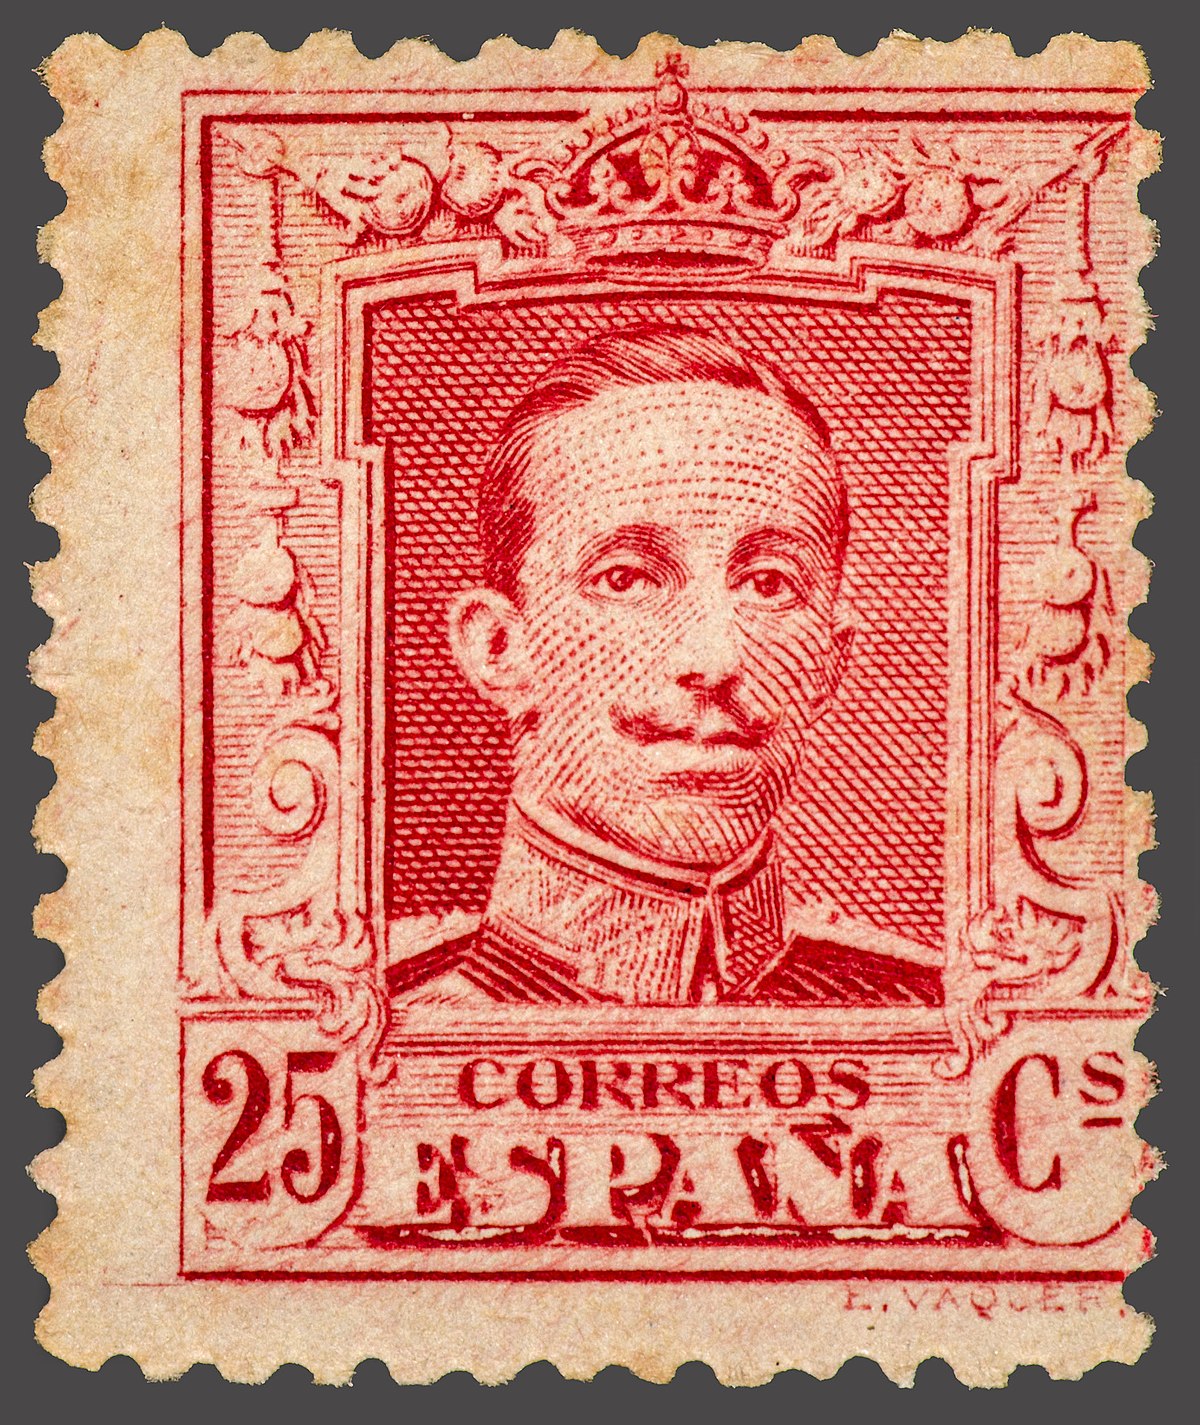 Propuesta Detallado Aptitud File:Sello Alfonso XIII 1922.jpg - Wikimedia Commons